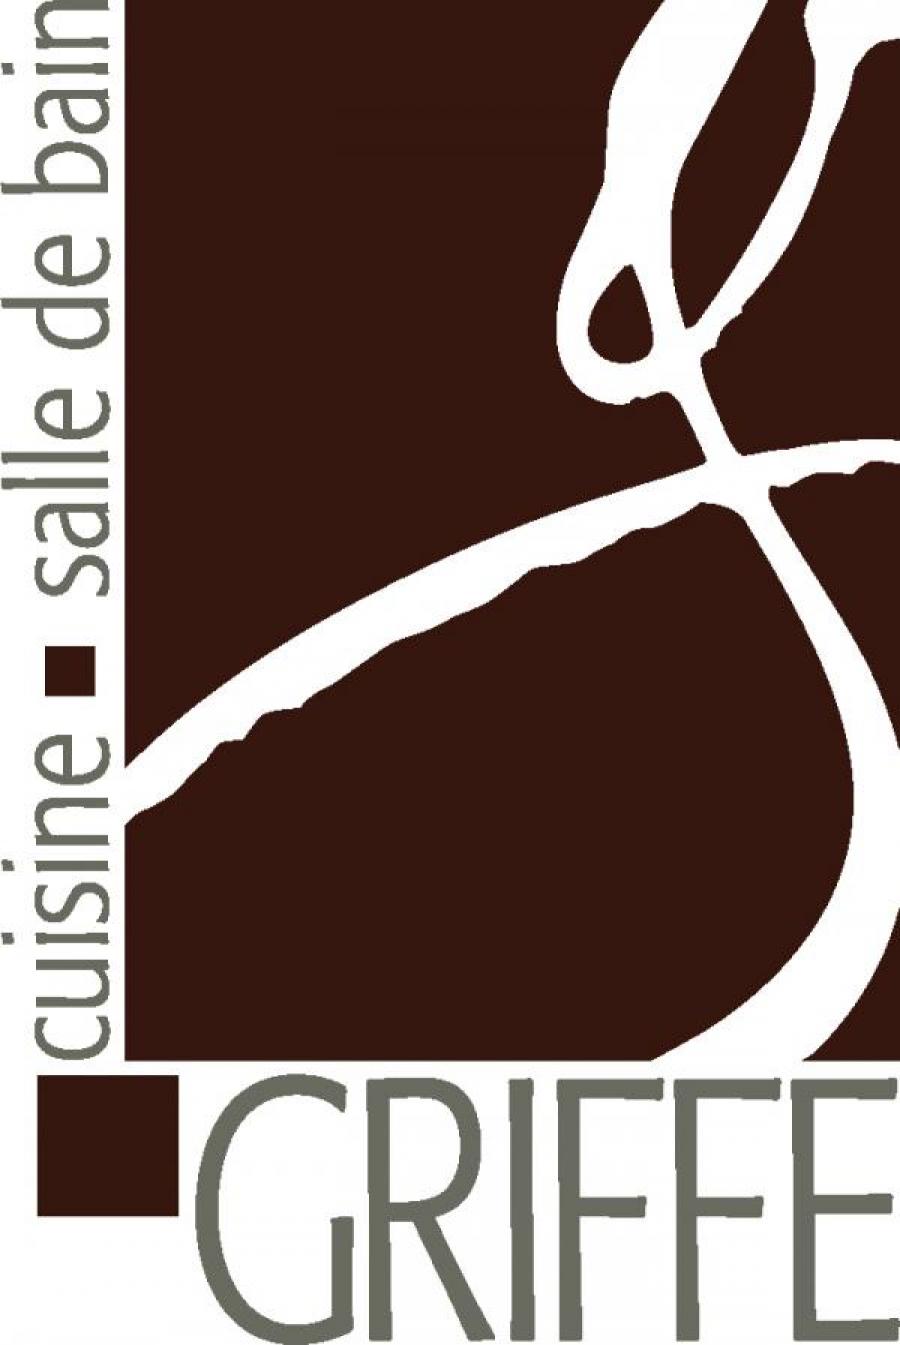 Griffe Cuisine Inc Logo